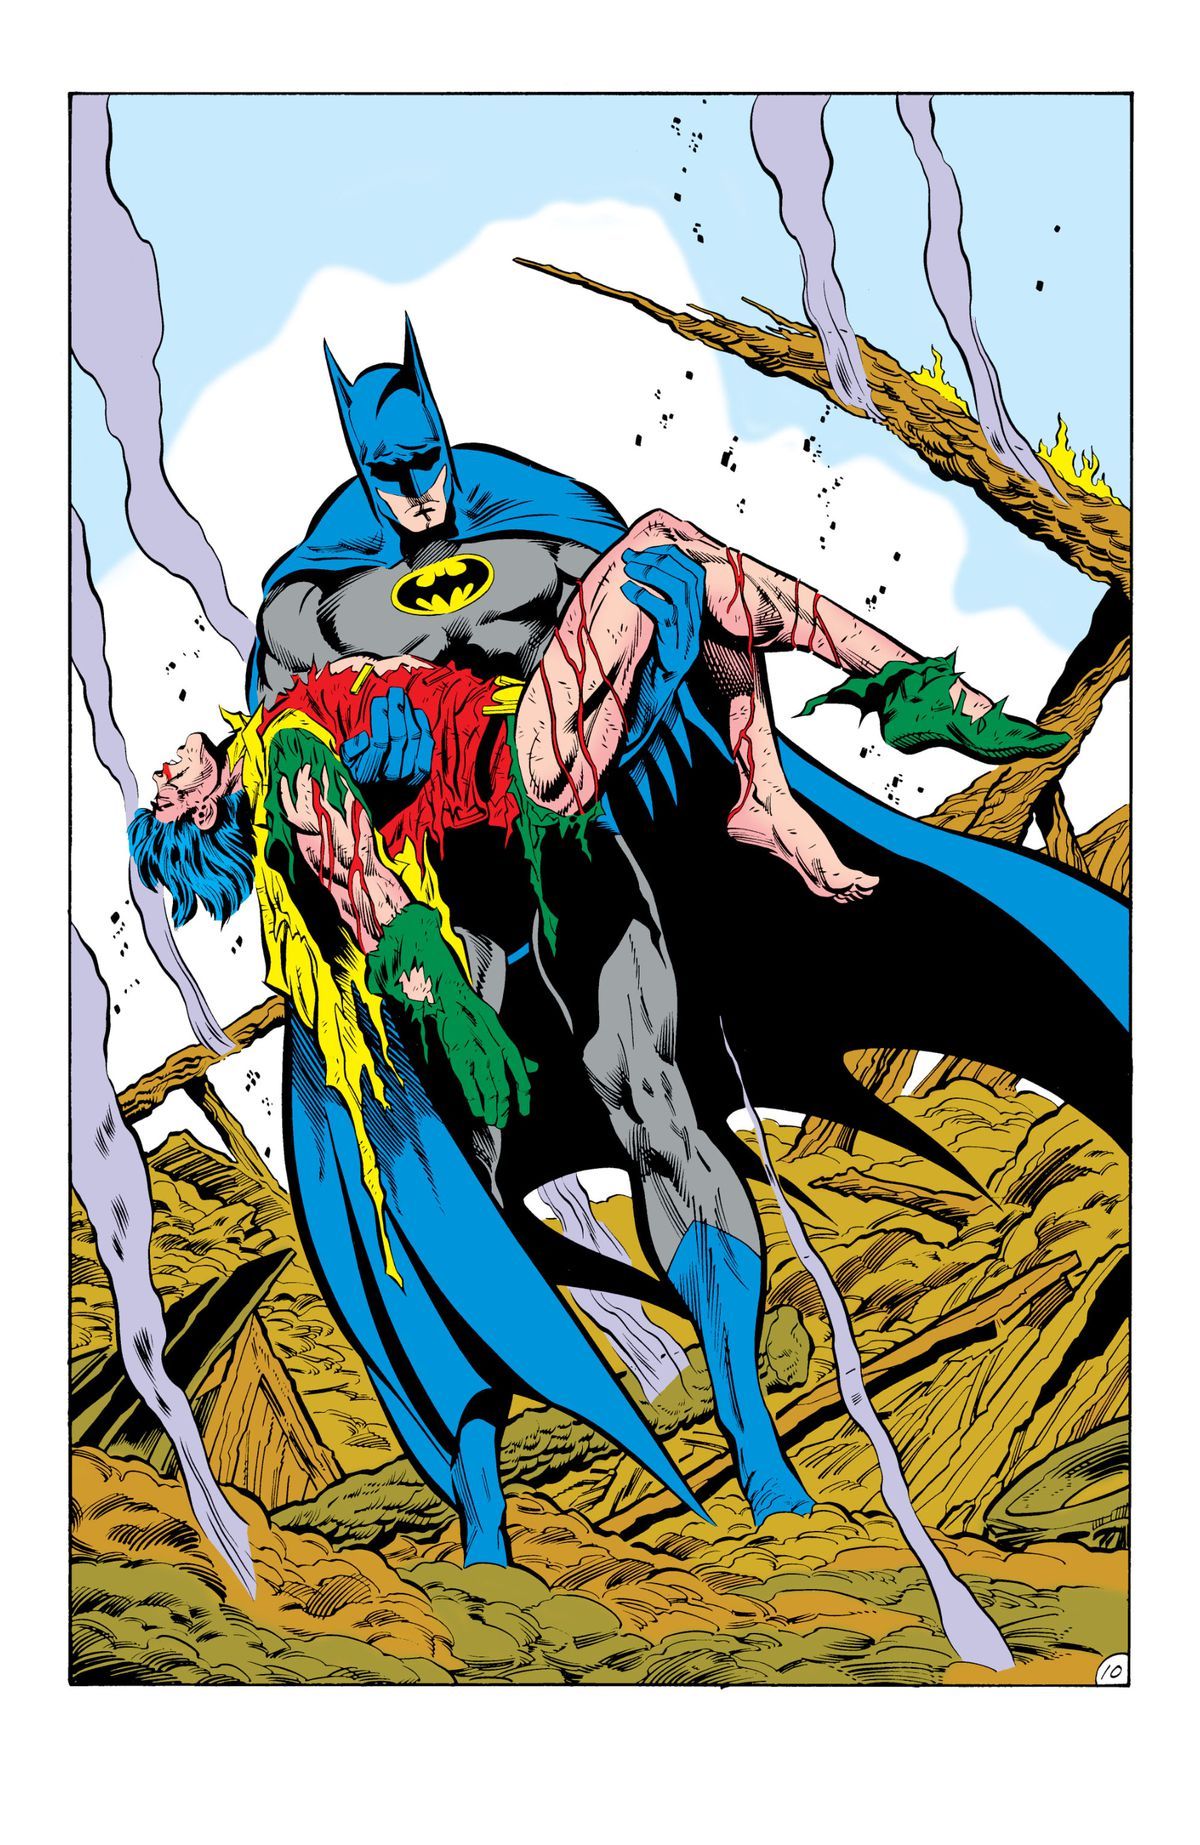 DC Comics killed off Robin in a Batman contest, but had a backup plan